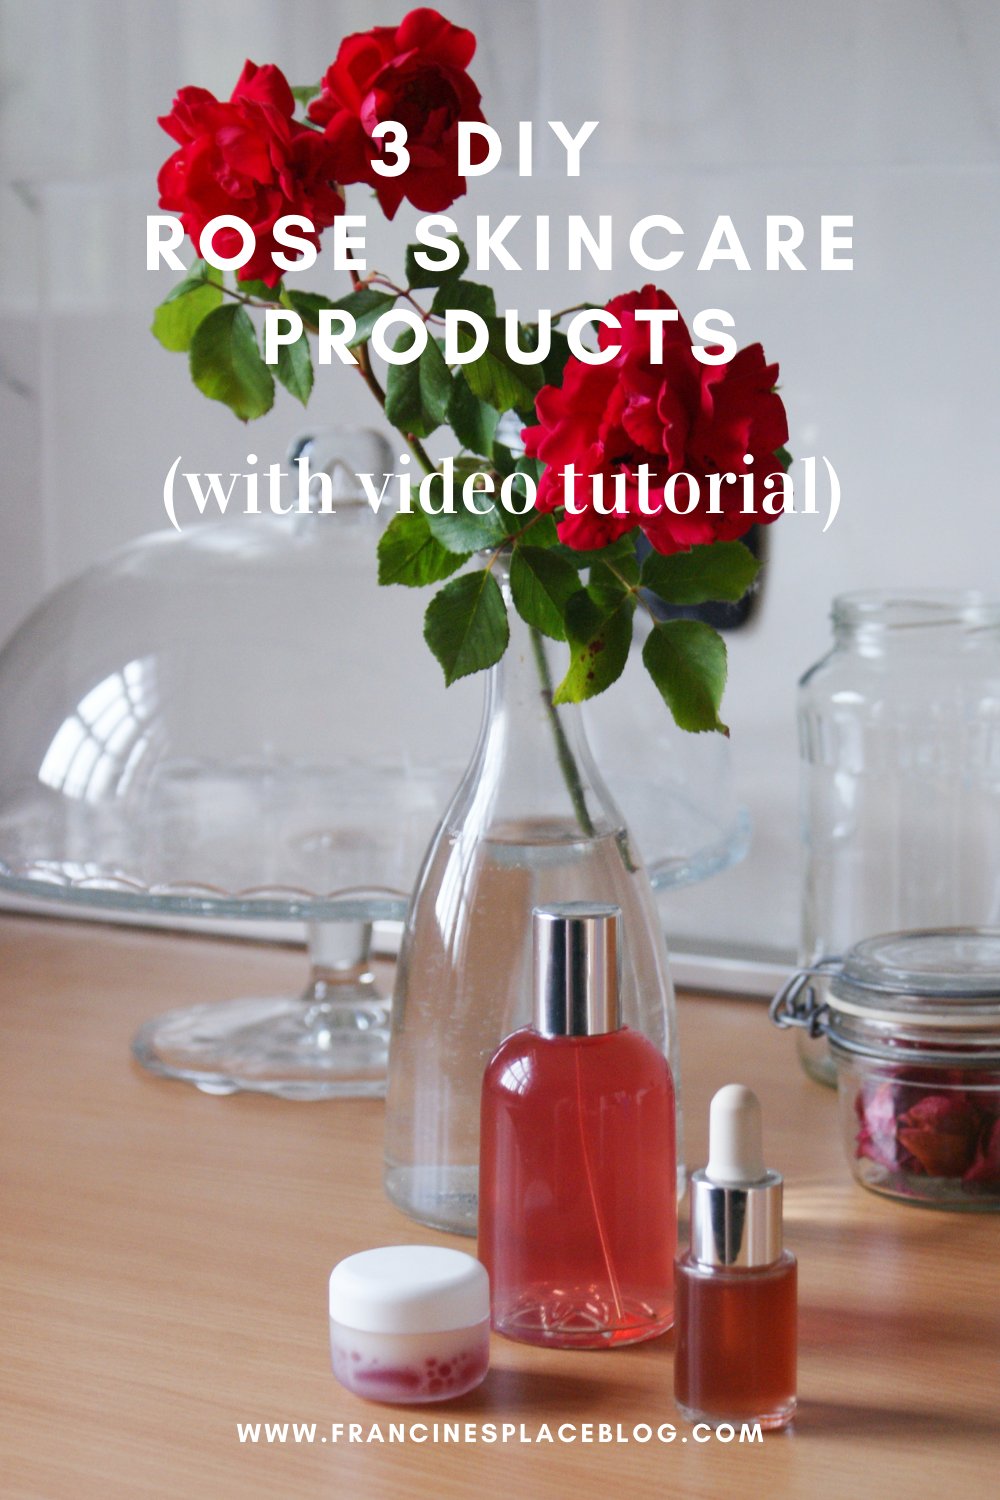 3 diy rose skincare products how make home easy tutorial recipe video francinesplaceblog serum water balm